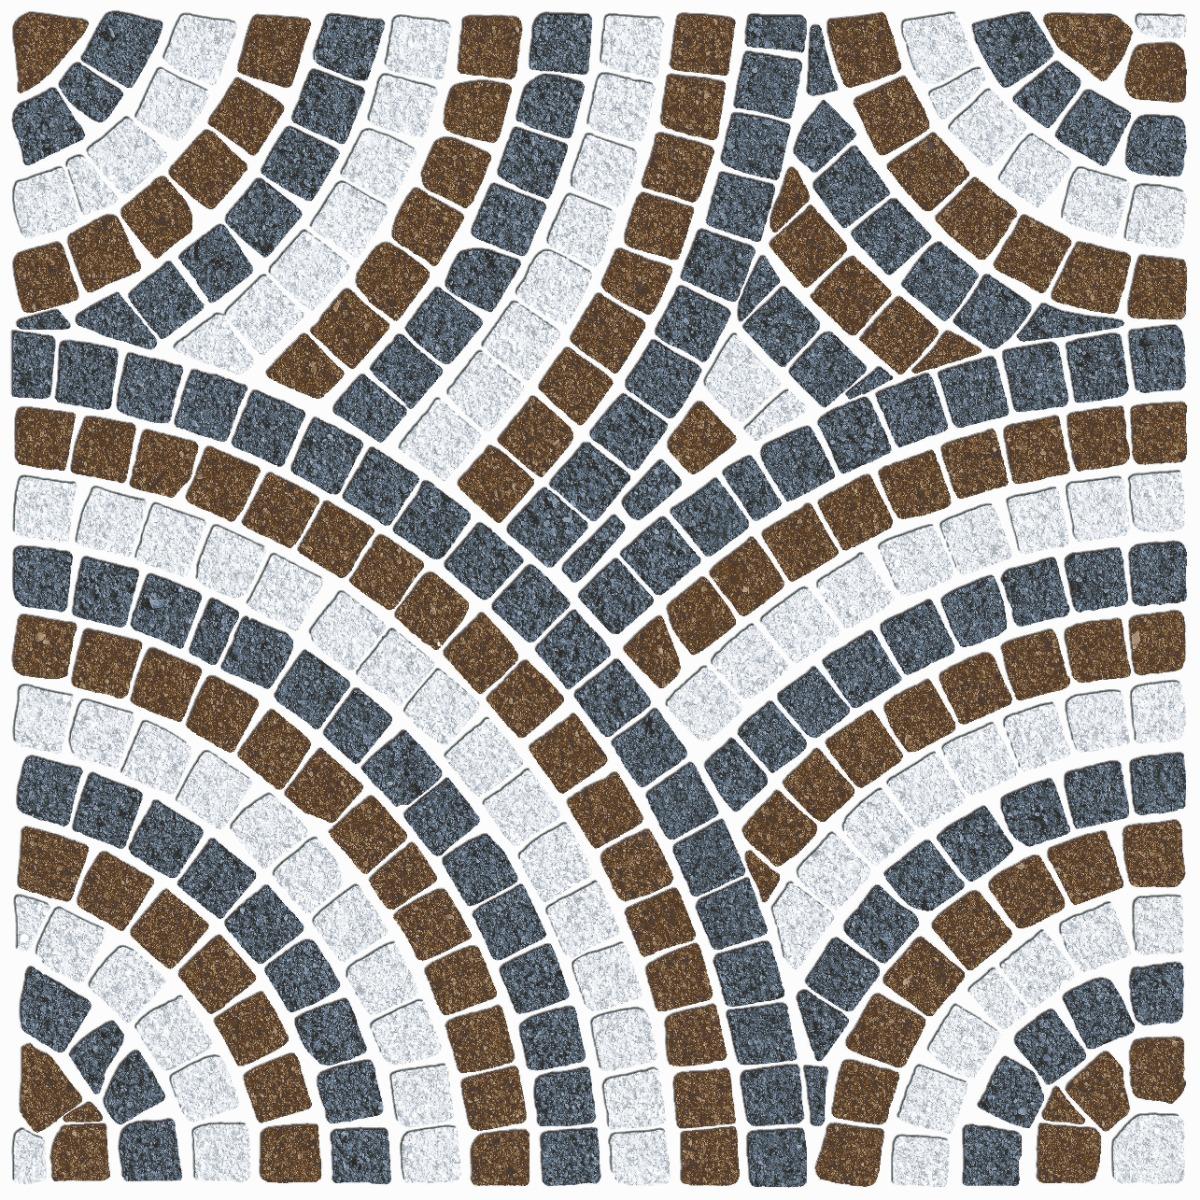 Matte Finish Tiles for Balcony Tiles, Parking Tiles, Terrace Tiles, Pathway Tiles, High Traffic Tiles, Commercial/Office, Outdoor Area